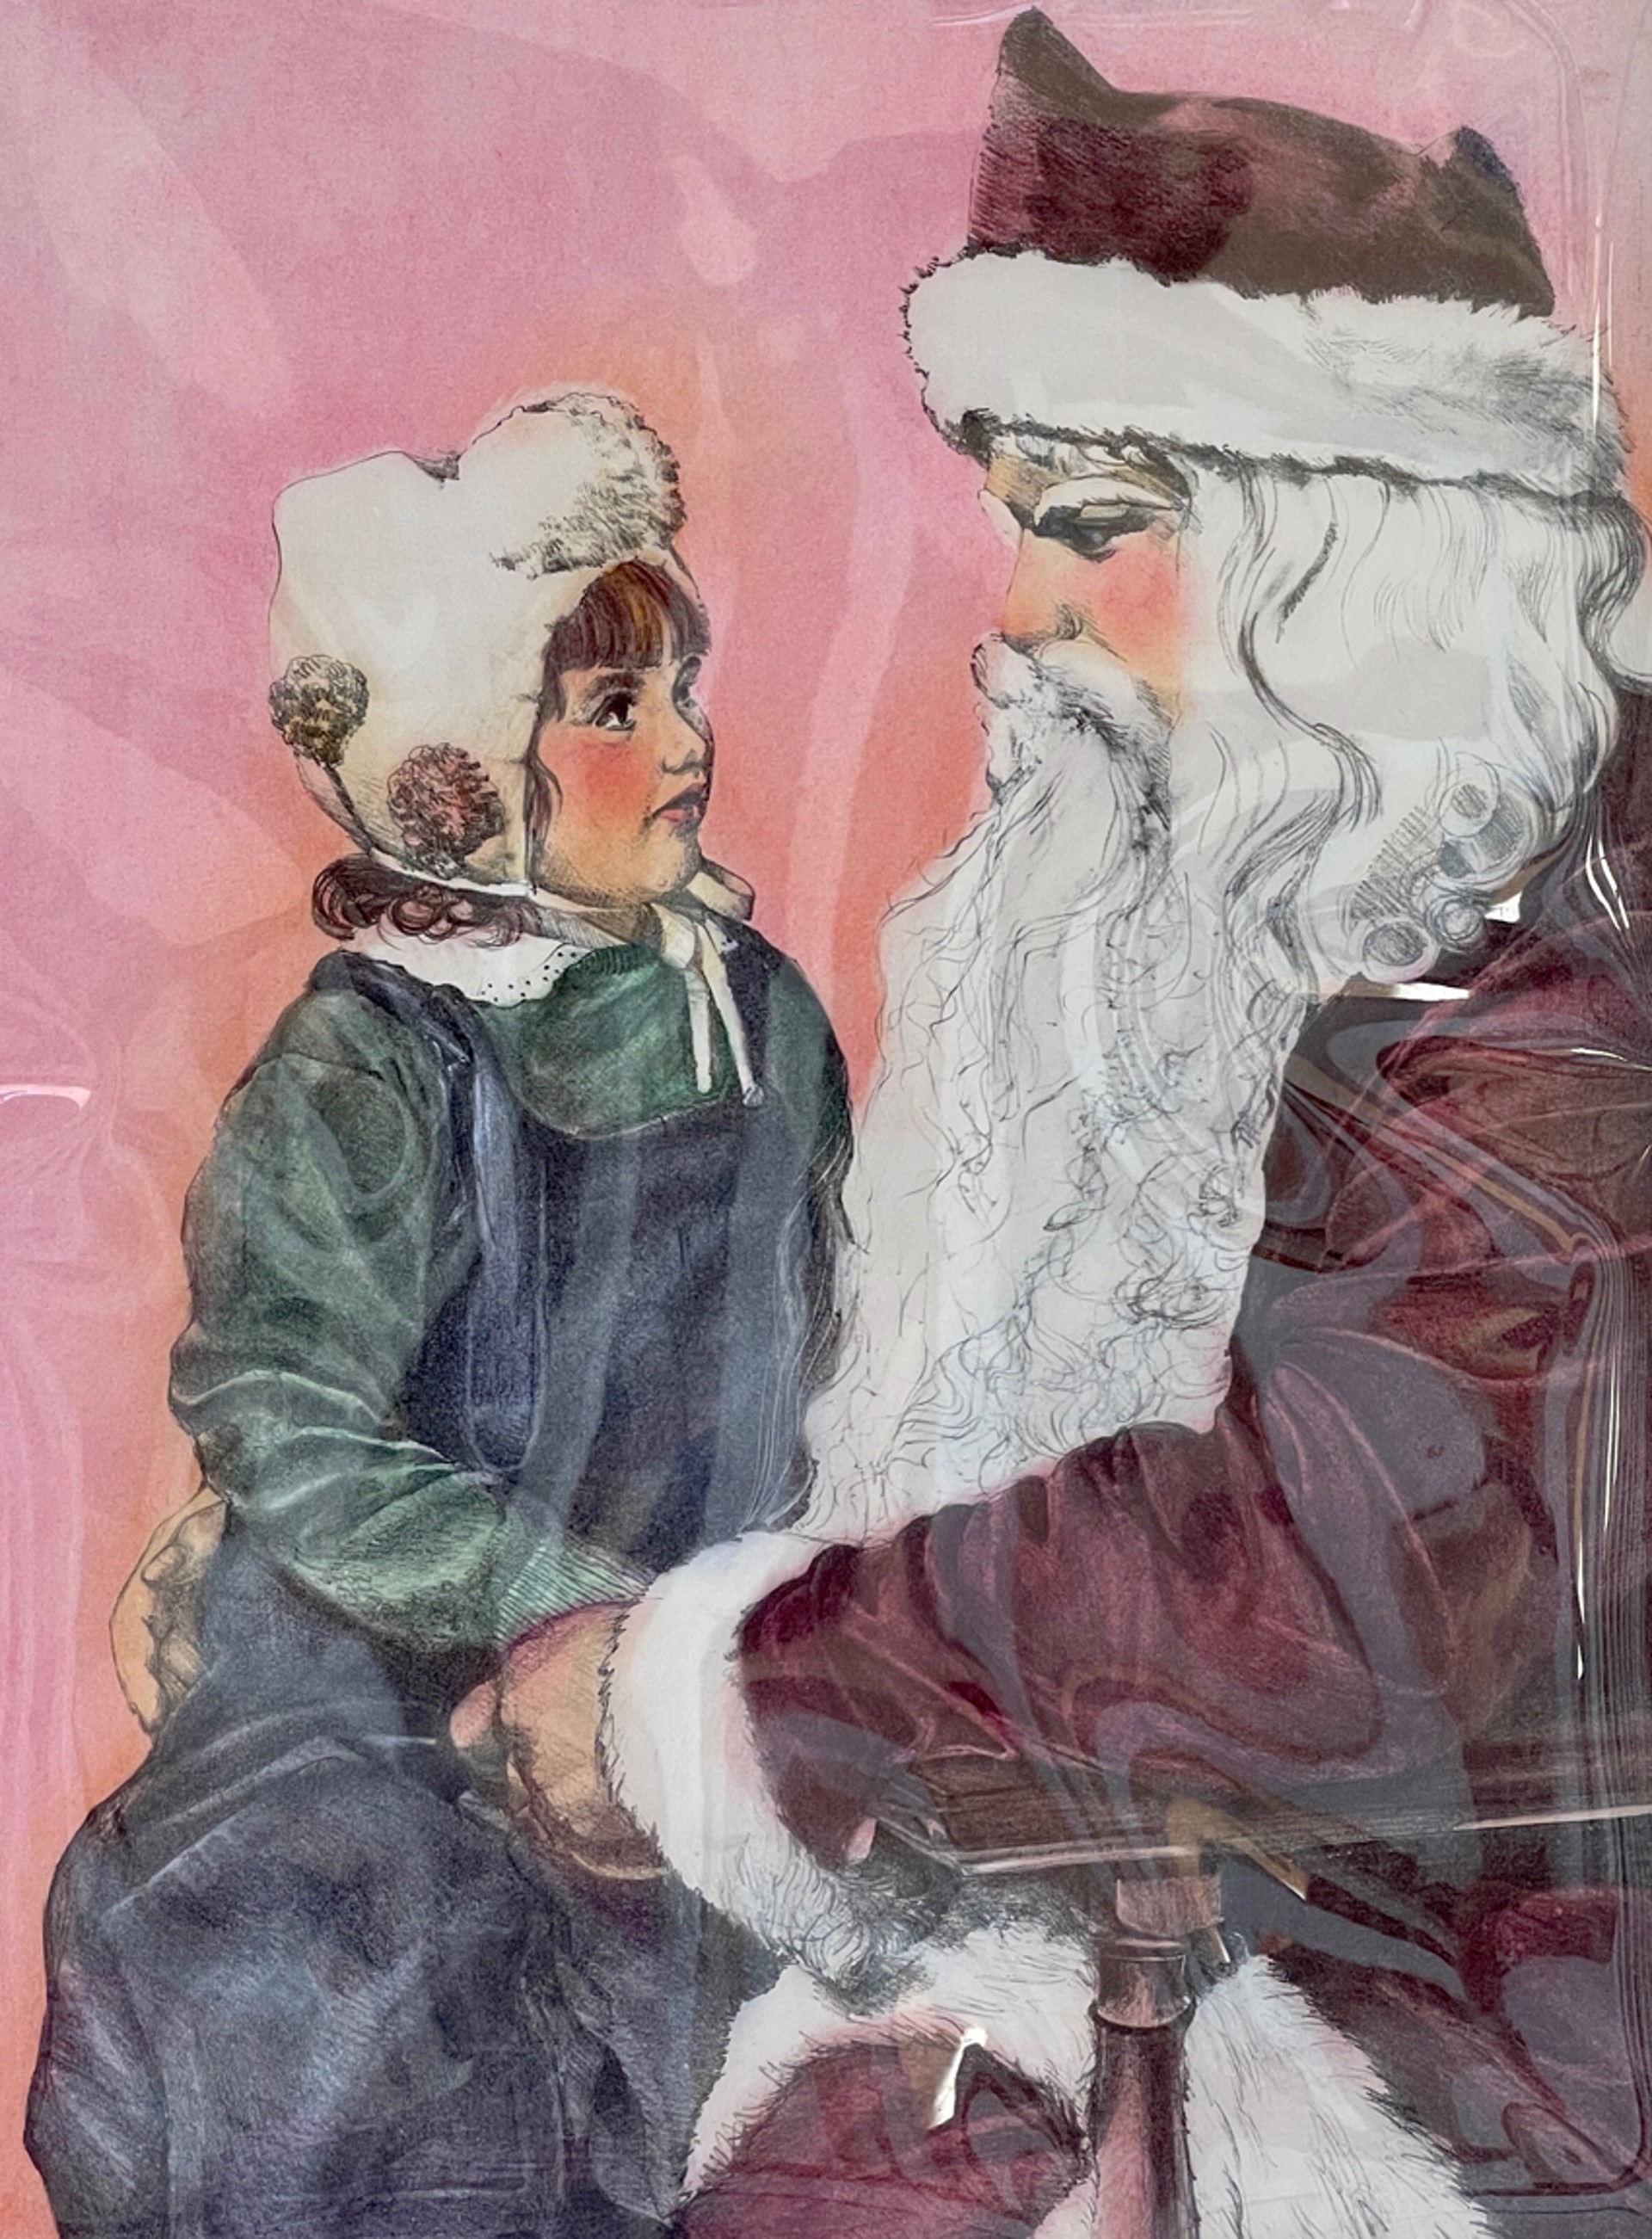 On Santa's Knee by Daria Shachmut